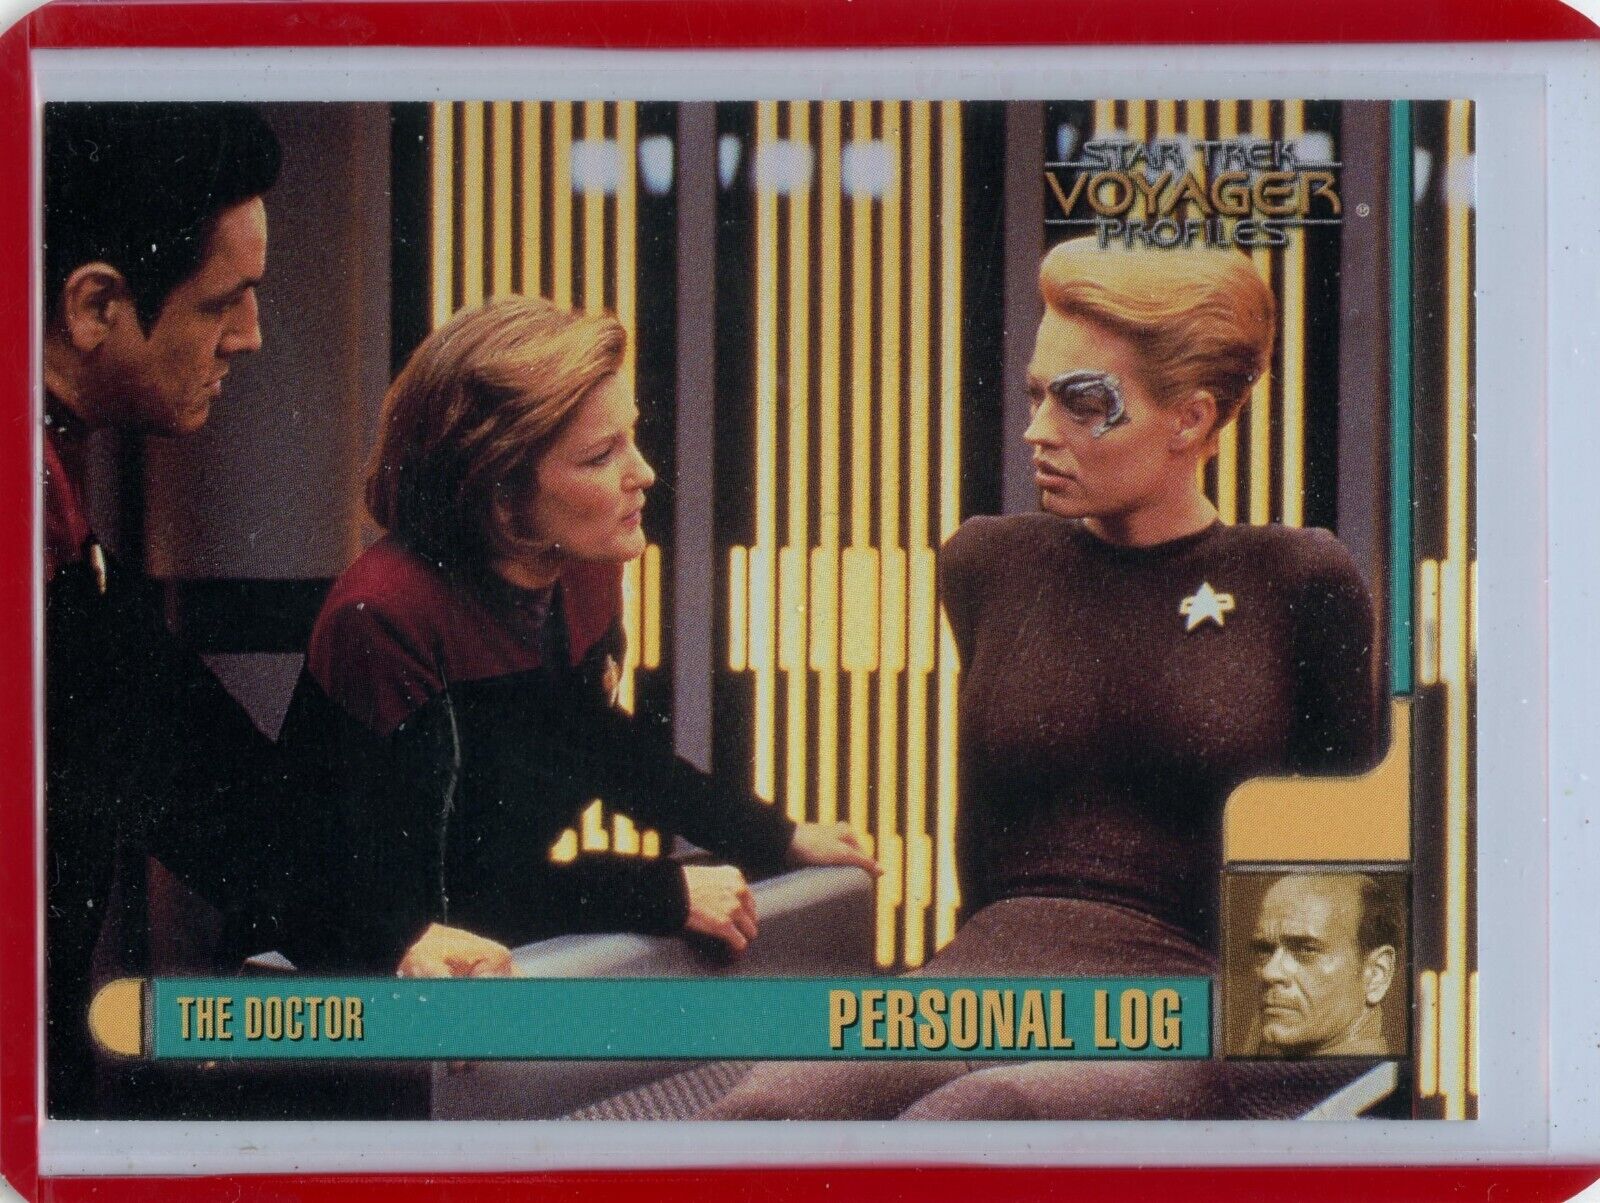 Jeri Ryan/Kate Mulgrew/R. Beltran. 1998 Star Trek Voyager Profiles Card #67